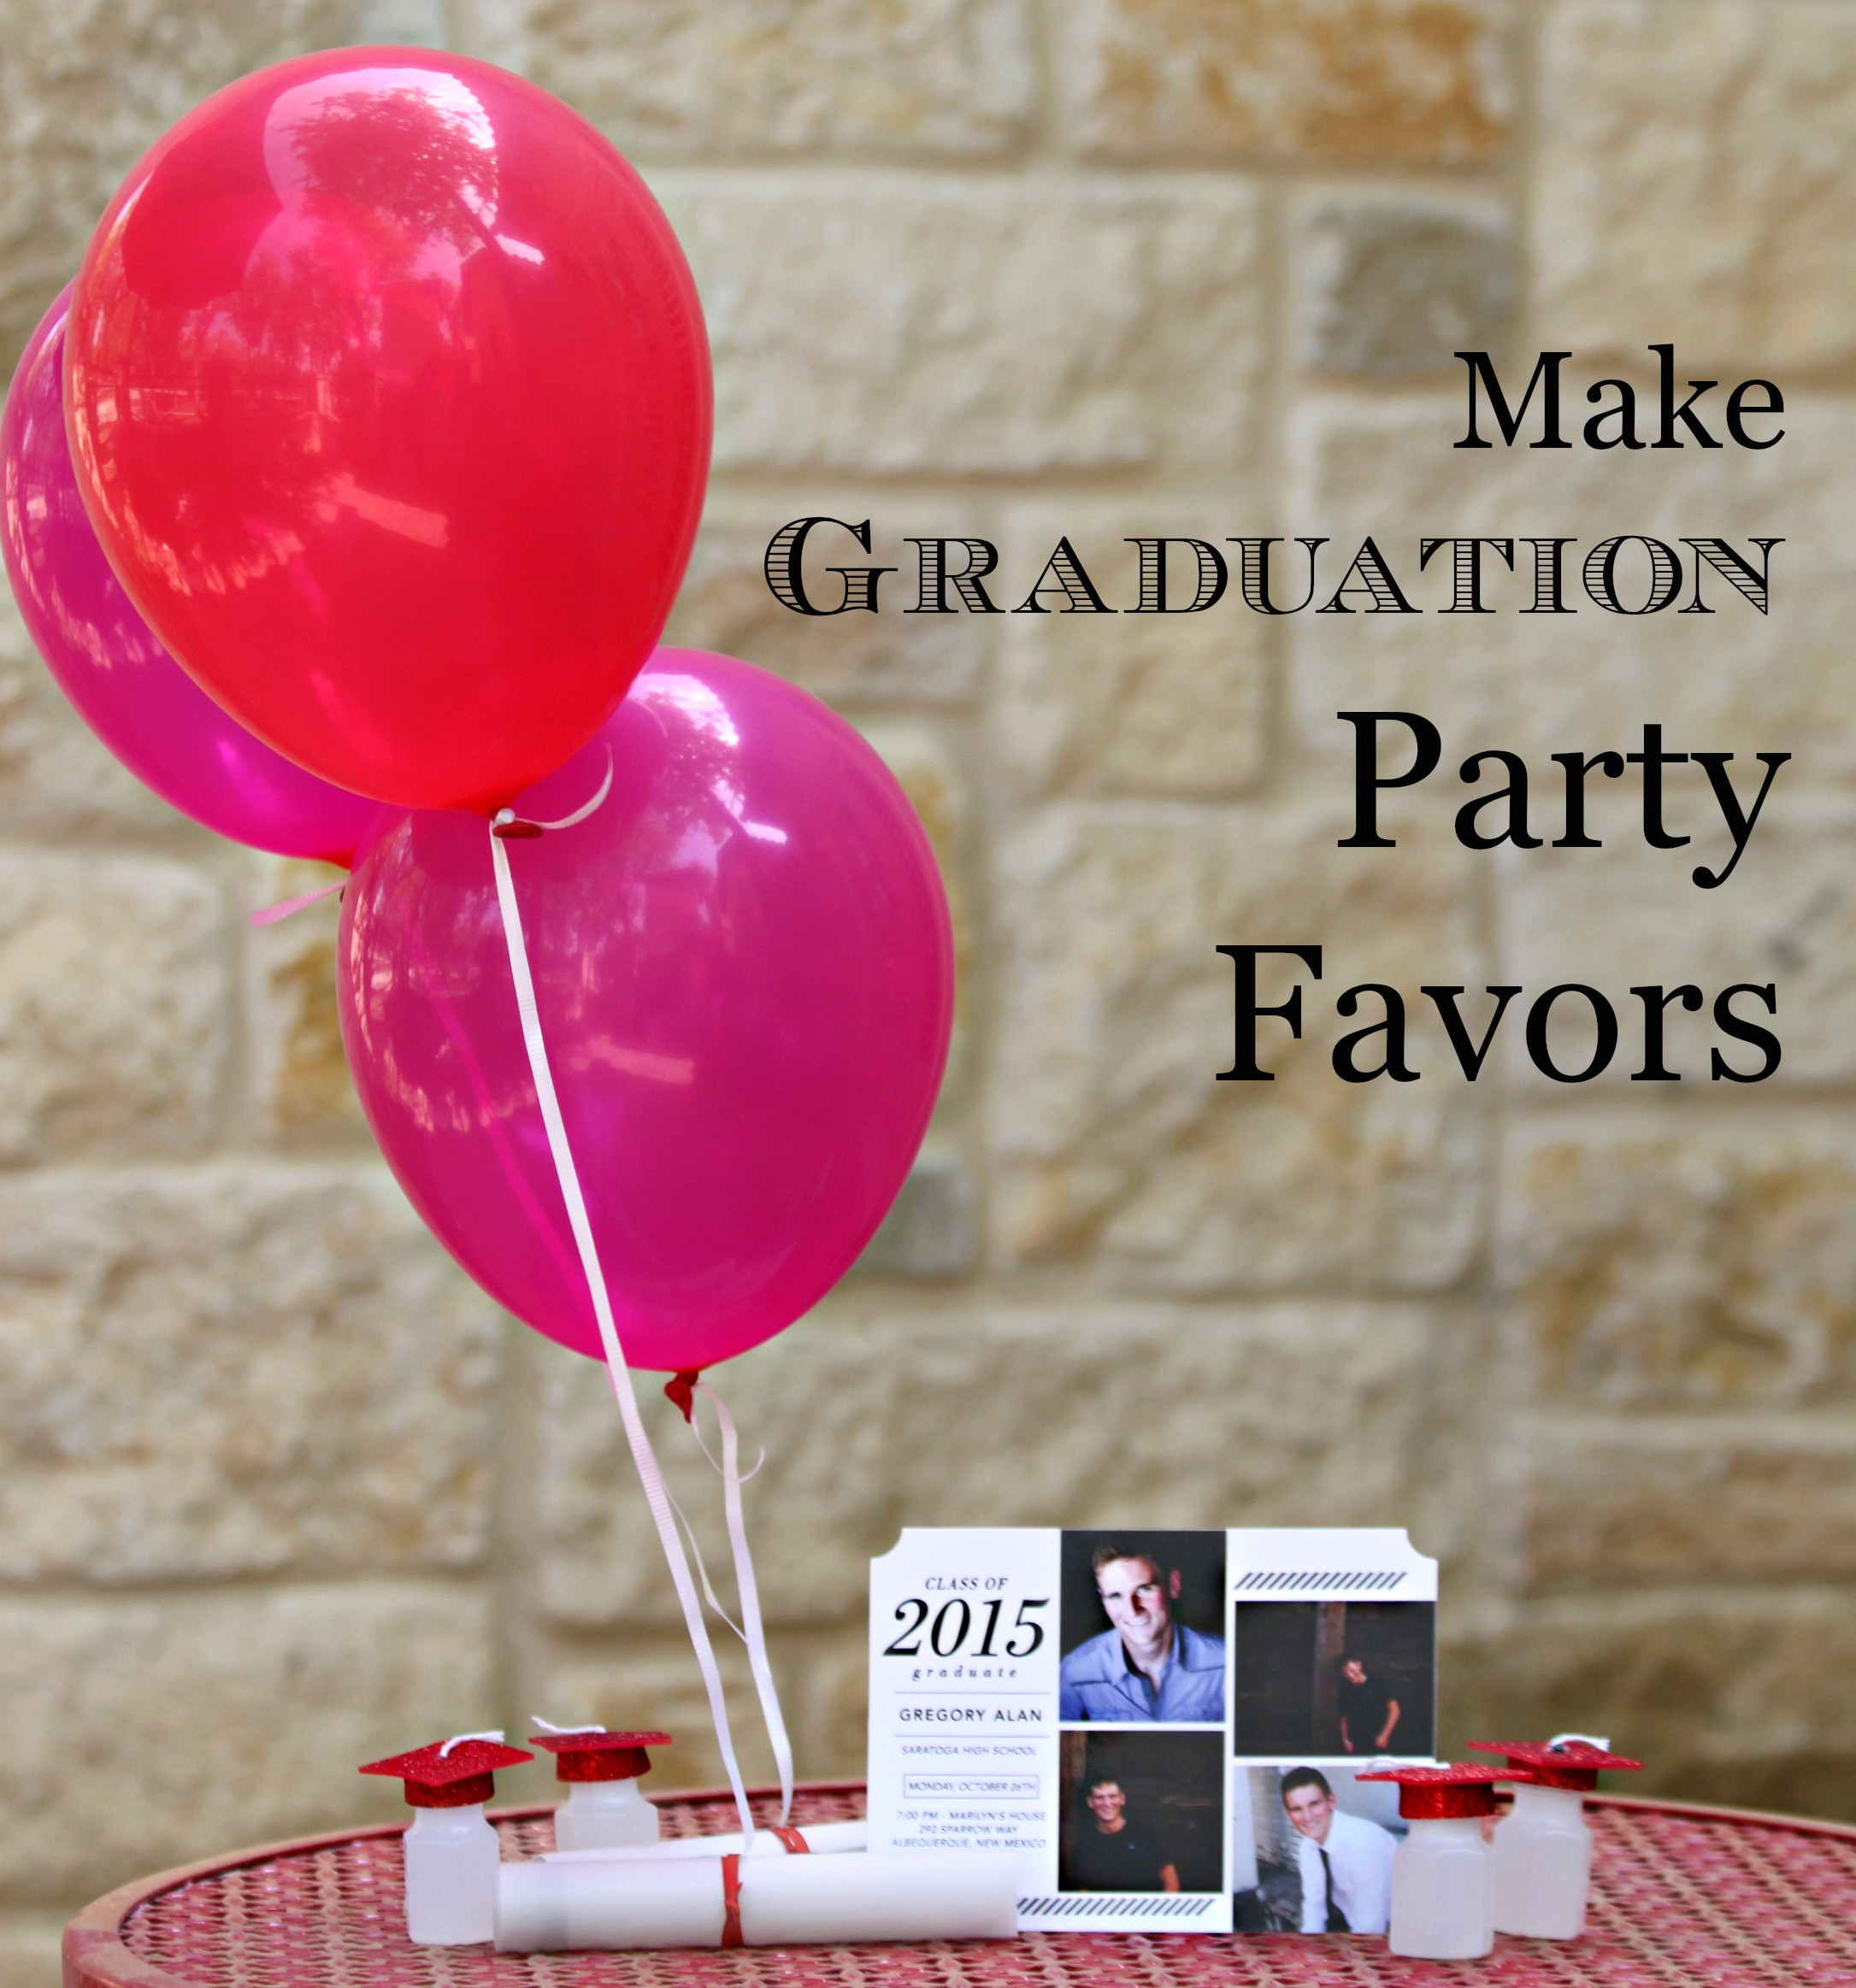 Graduation Party Favor Ideas To Make
 Make Cap and Diploma Graduation Party Favors Morena s Corner